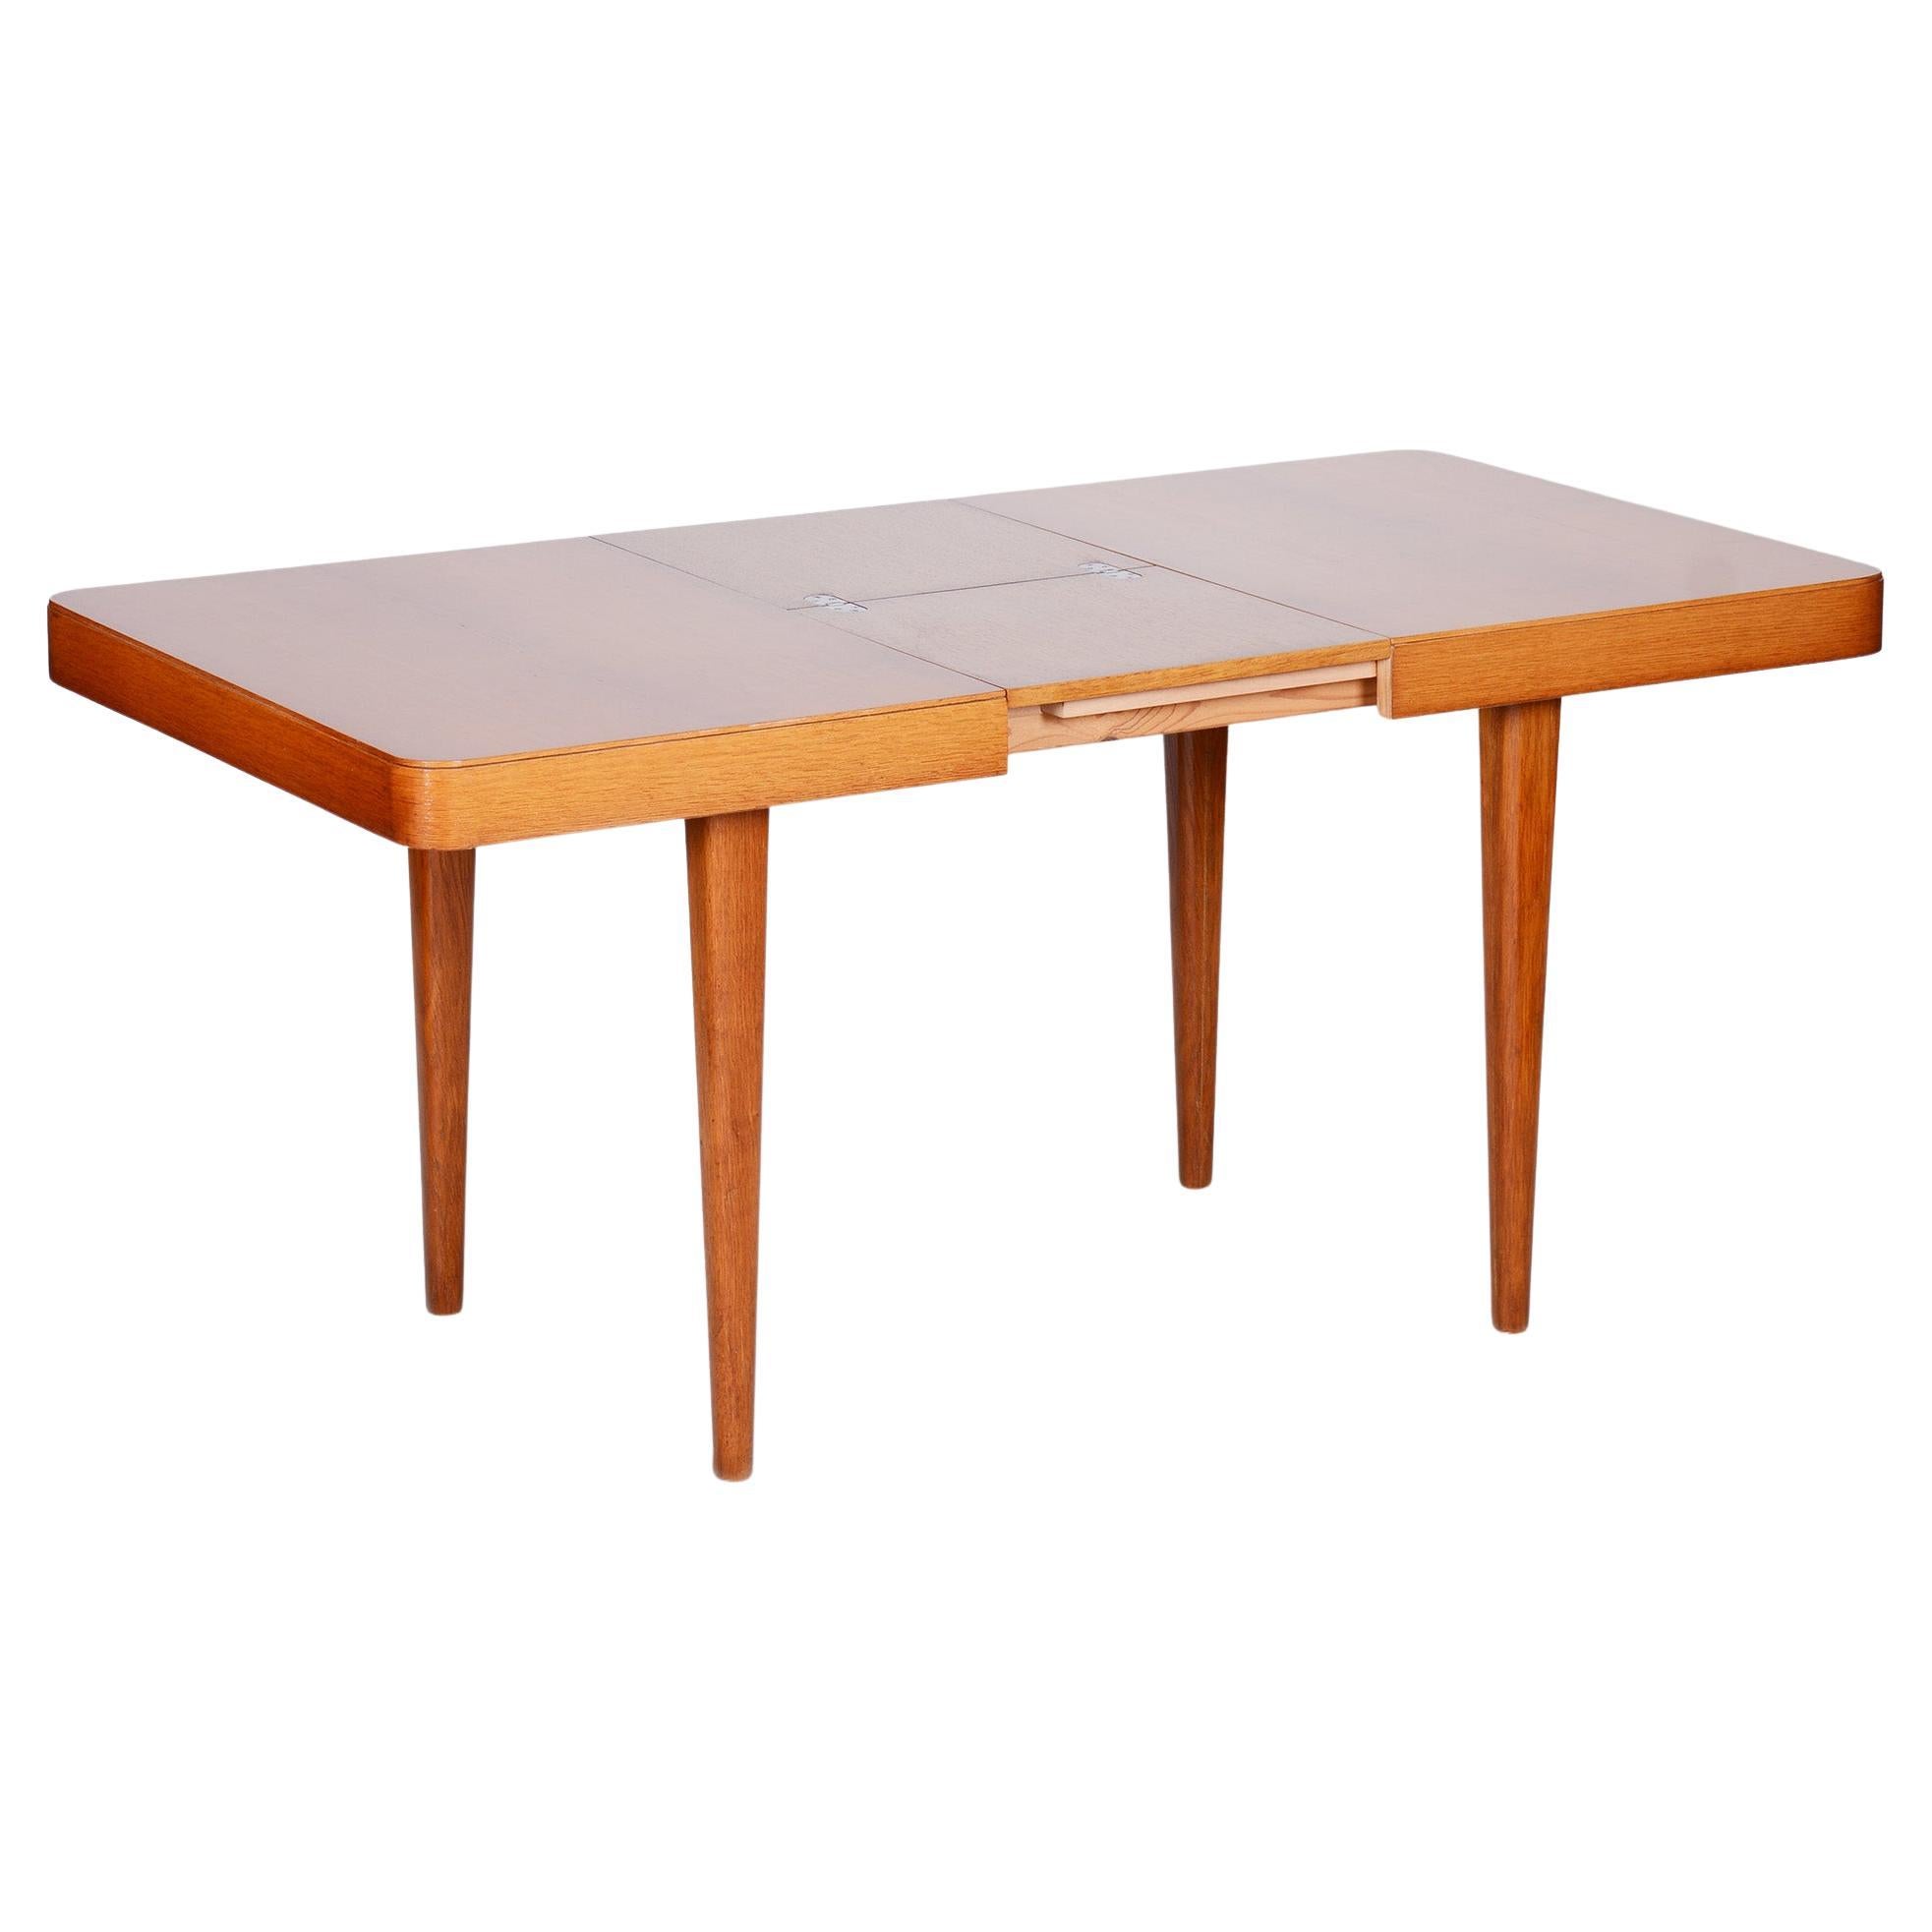 Oak Dining Table, Designed by Jindrich Halabala, 1940s, Made by Up Závody For Sale